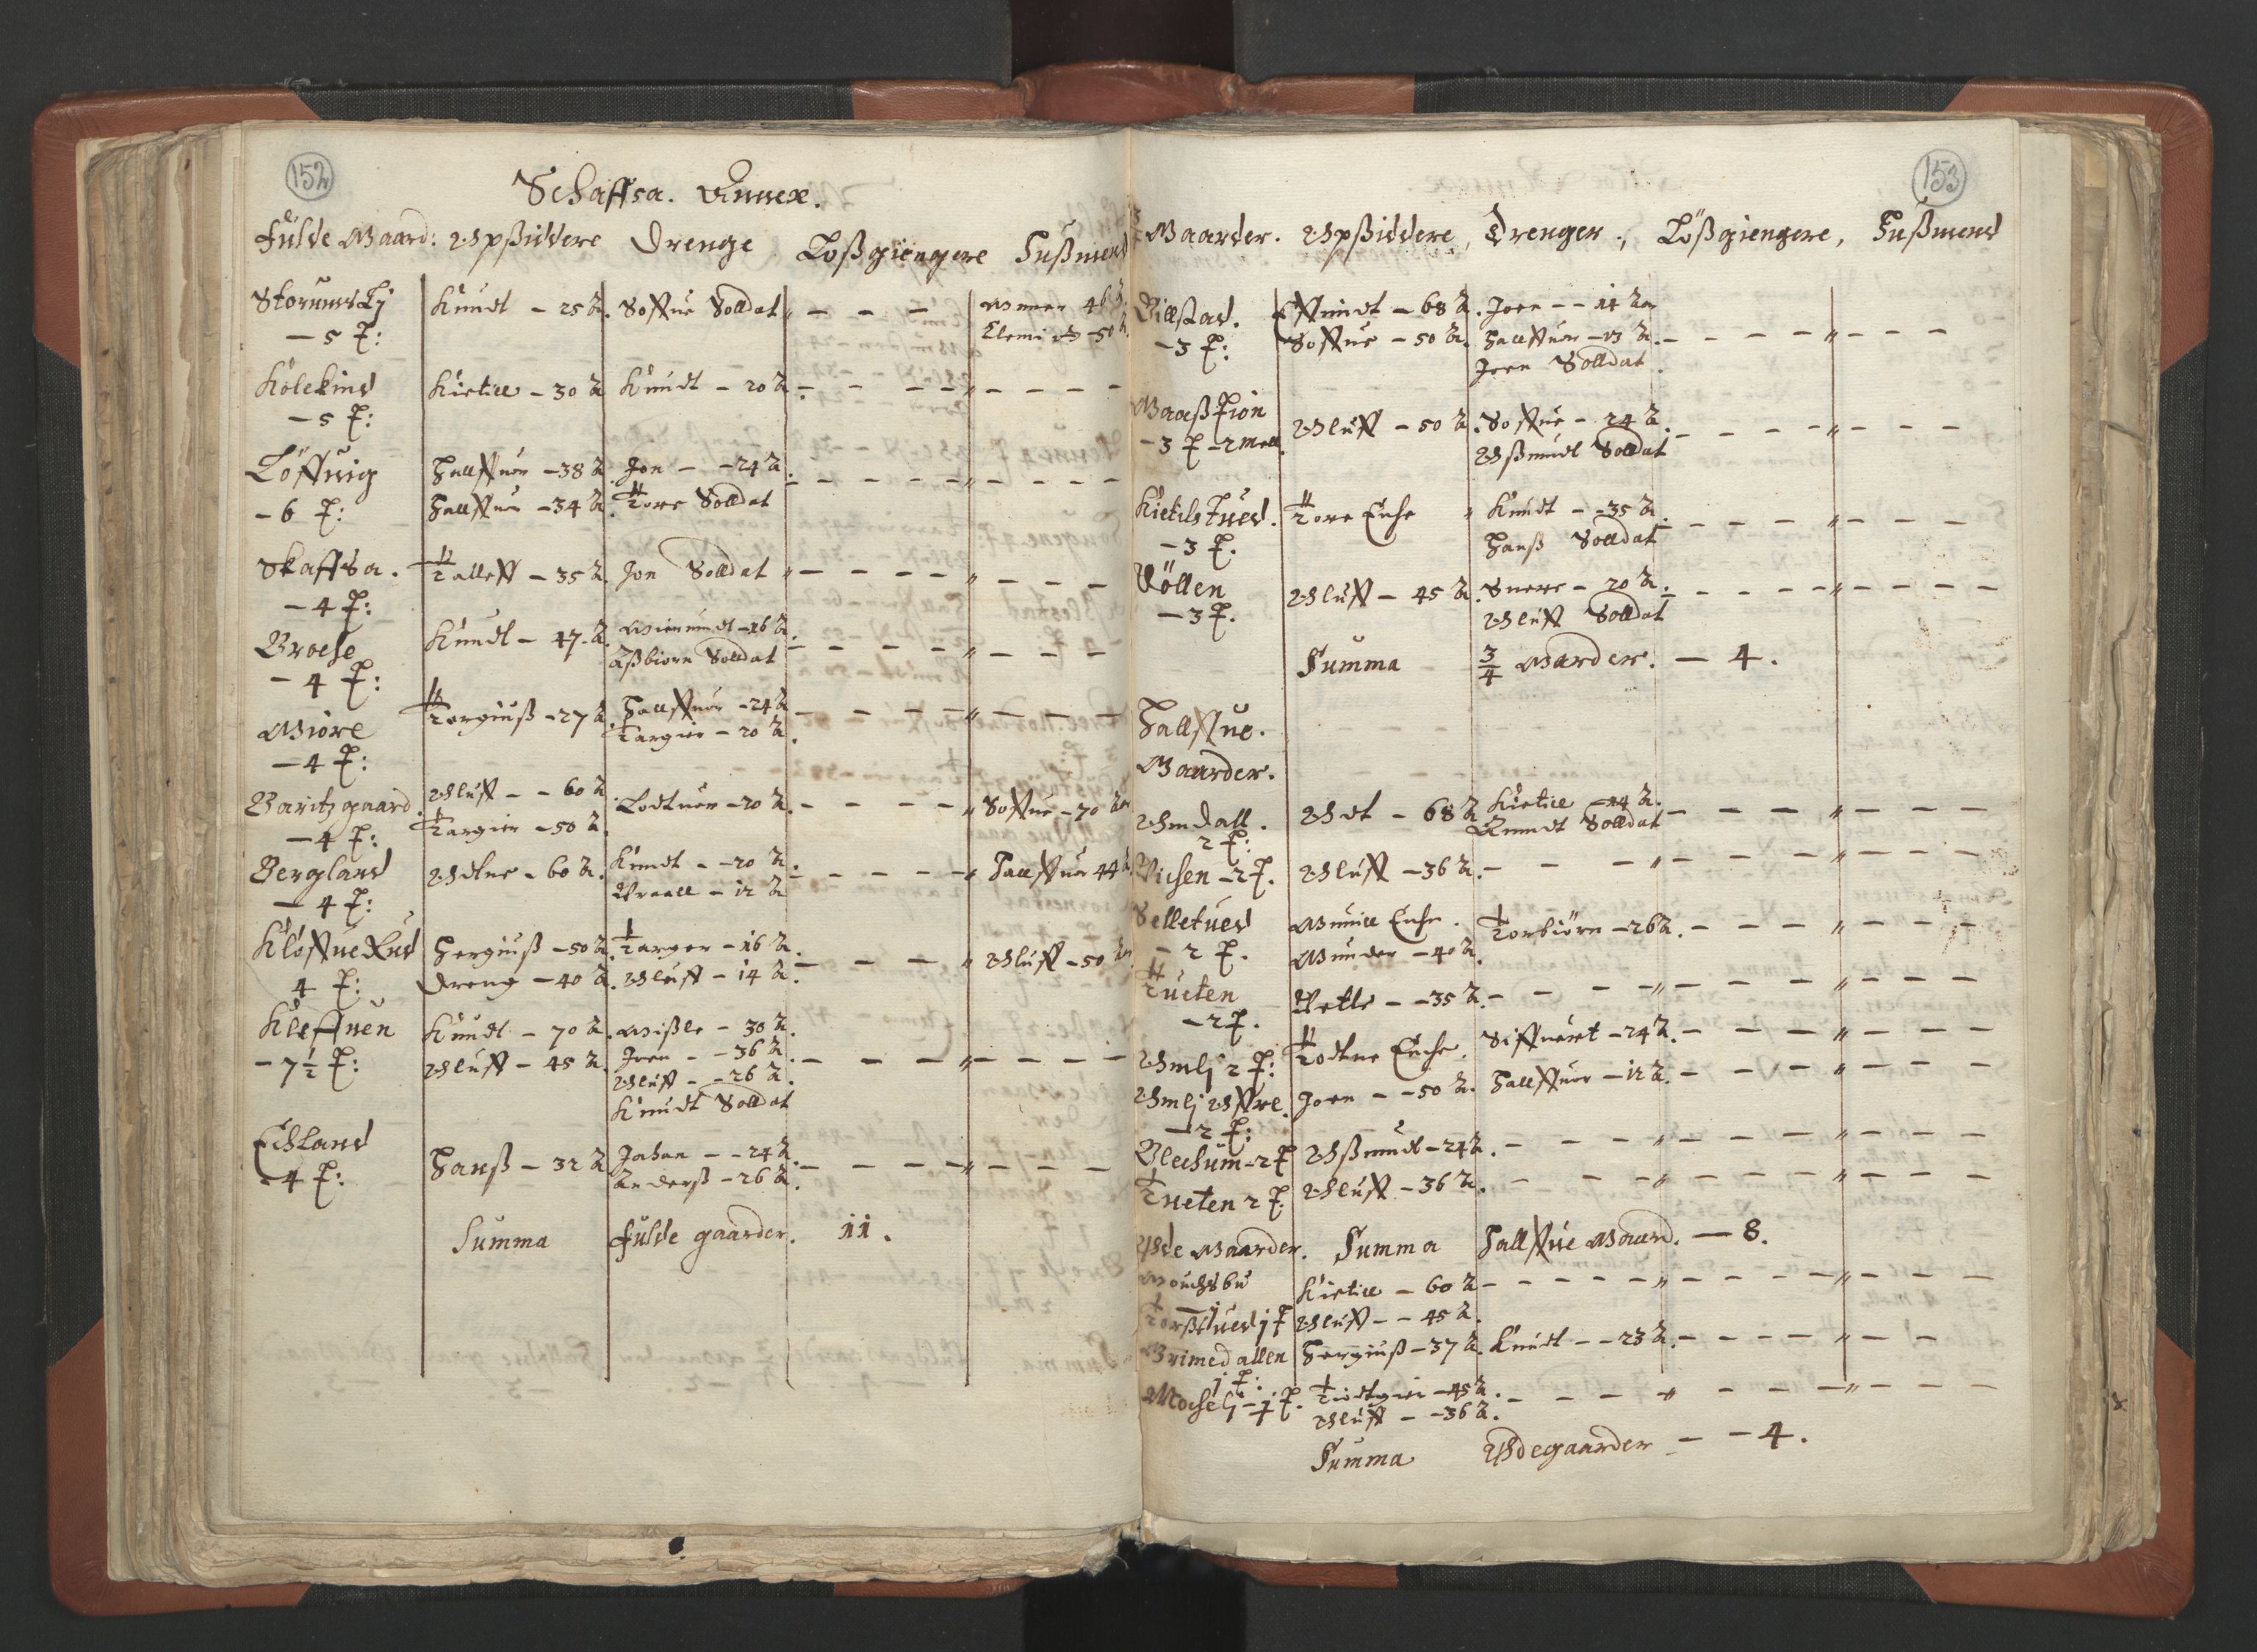 RA, Vicar's Census 1664-1666, no. 12: Øvre Telemark deanery, Nedre Telemark deanery and Bamble deanery, 1664-1666, p. 152-153